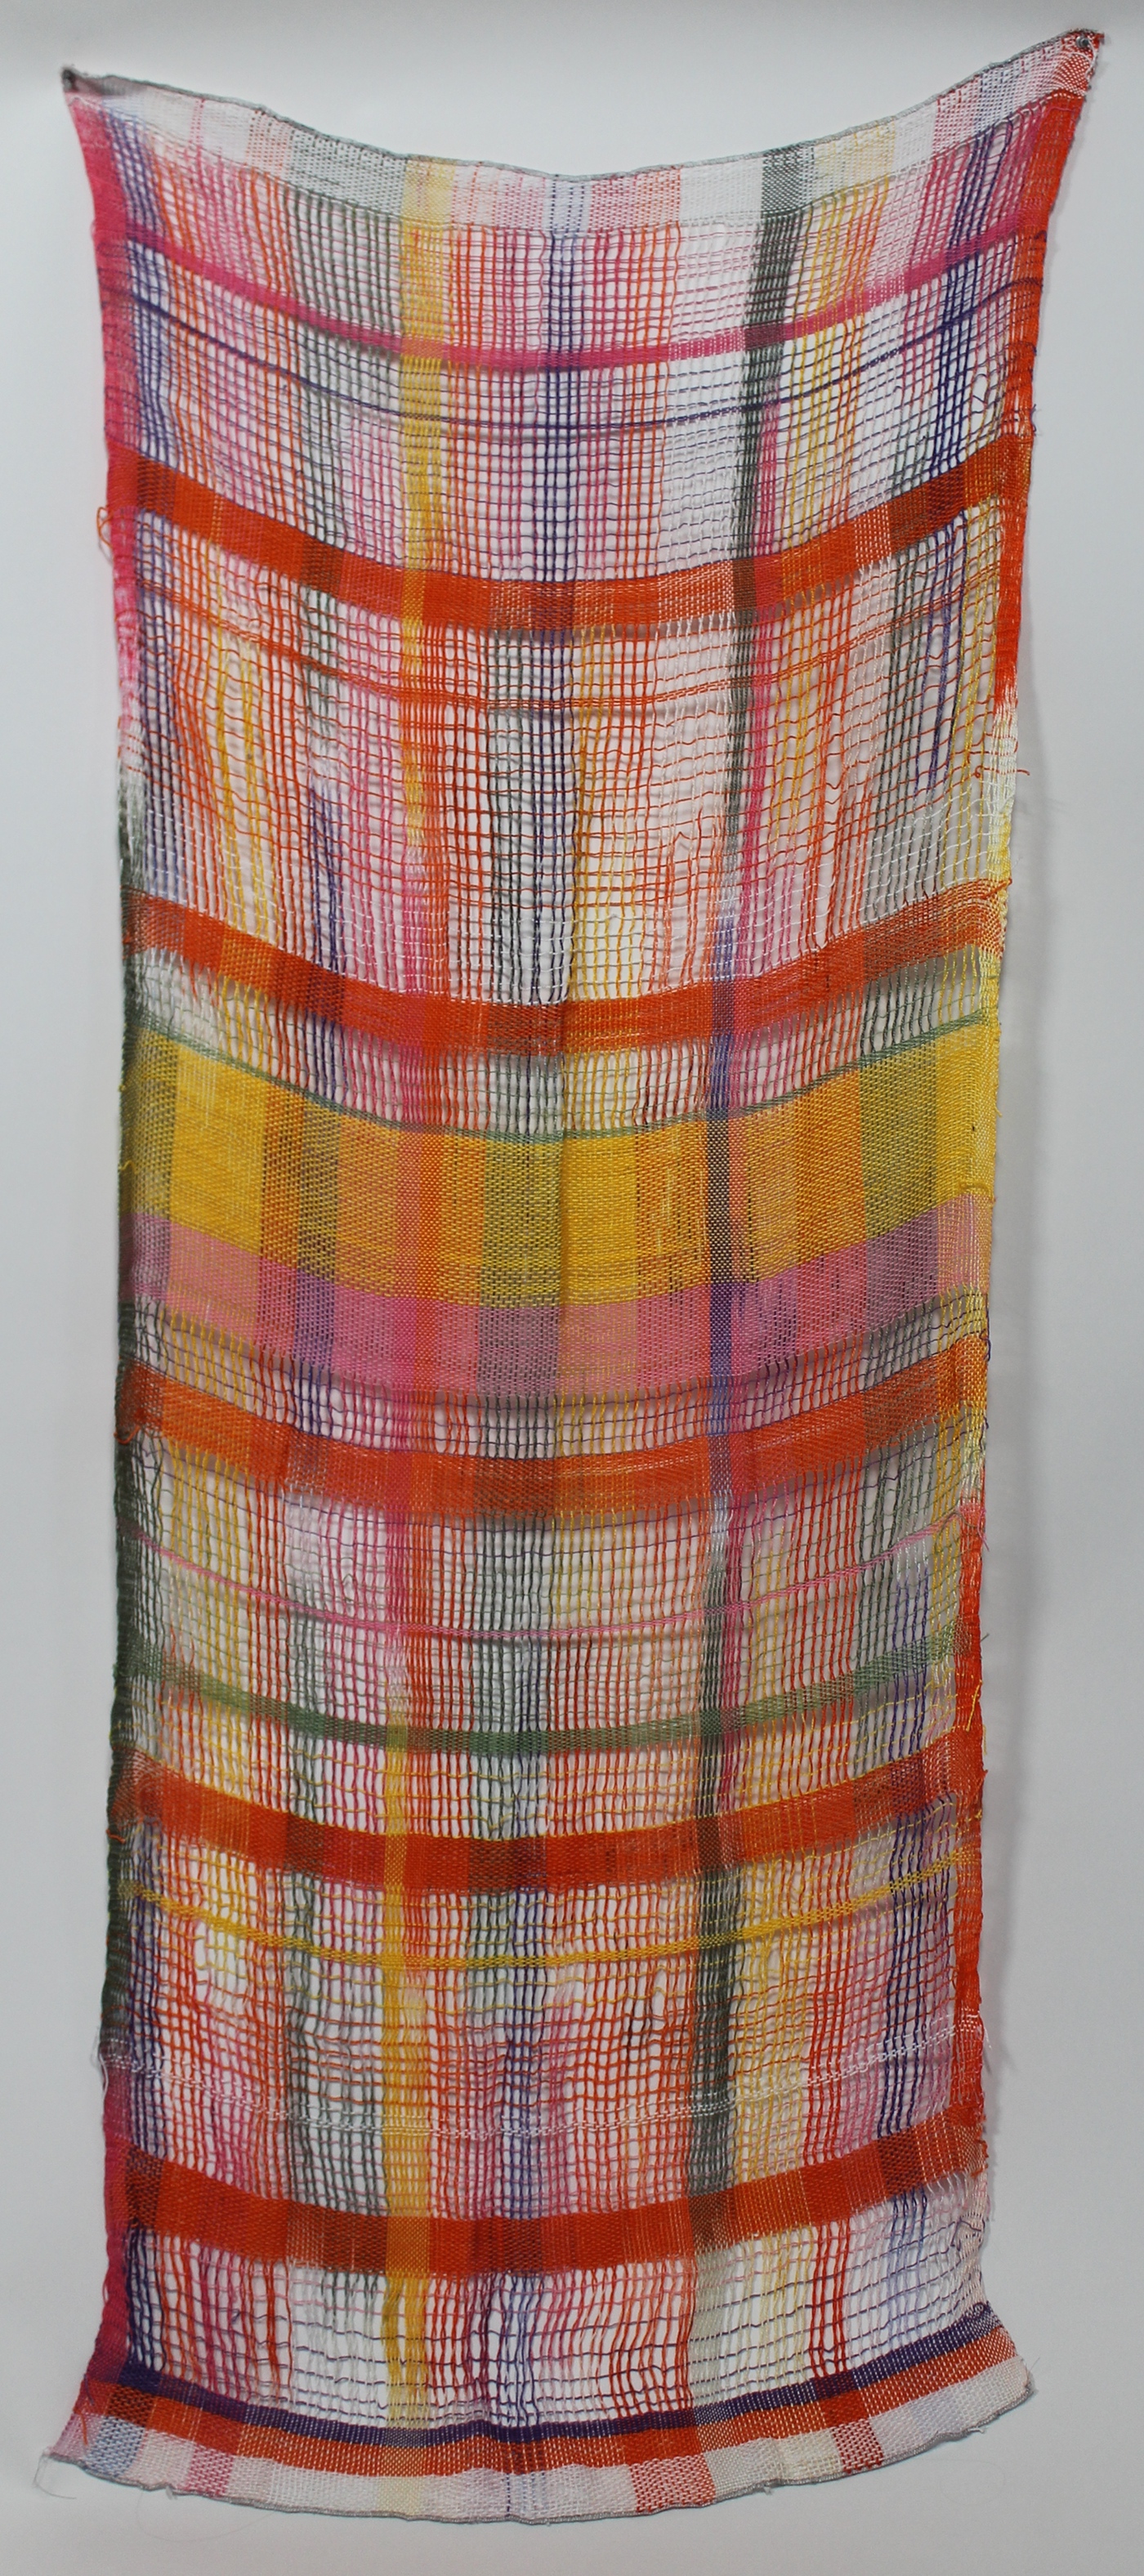 weaving Fashion  Bathing Suits Digital Printing sewing garment making. culture cuba experimental textile design 